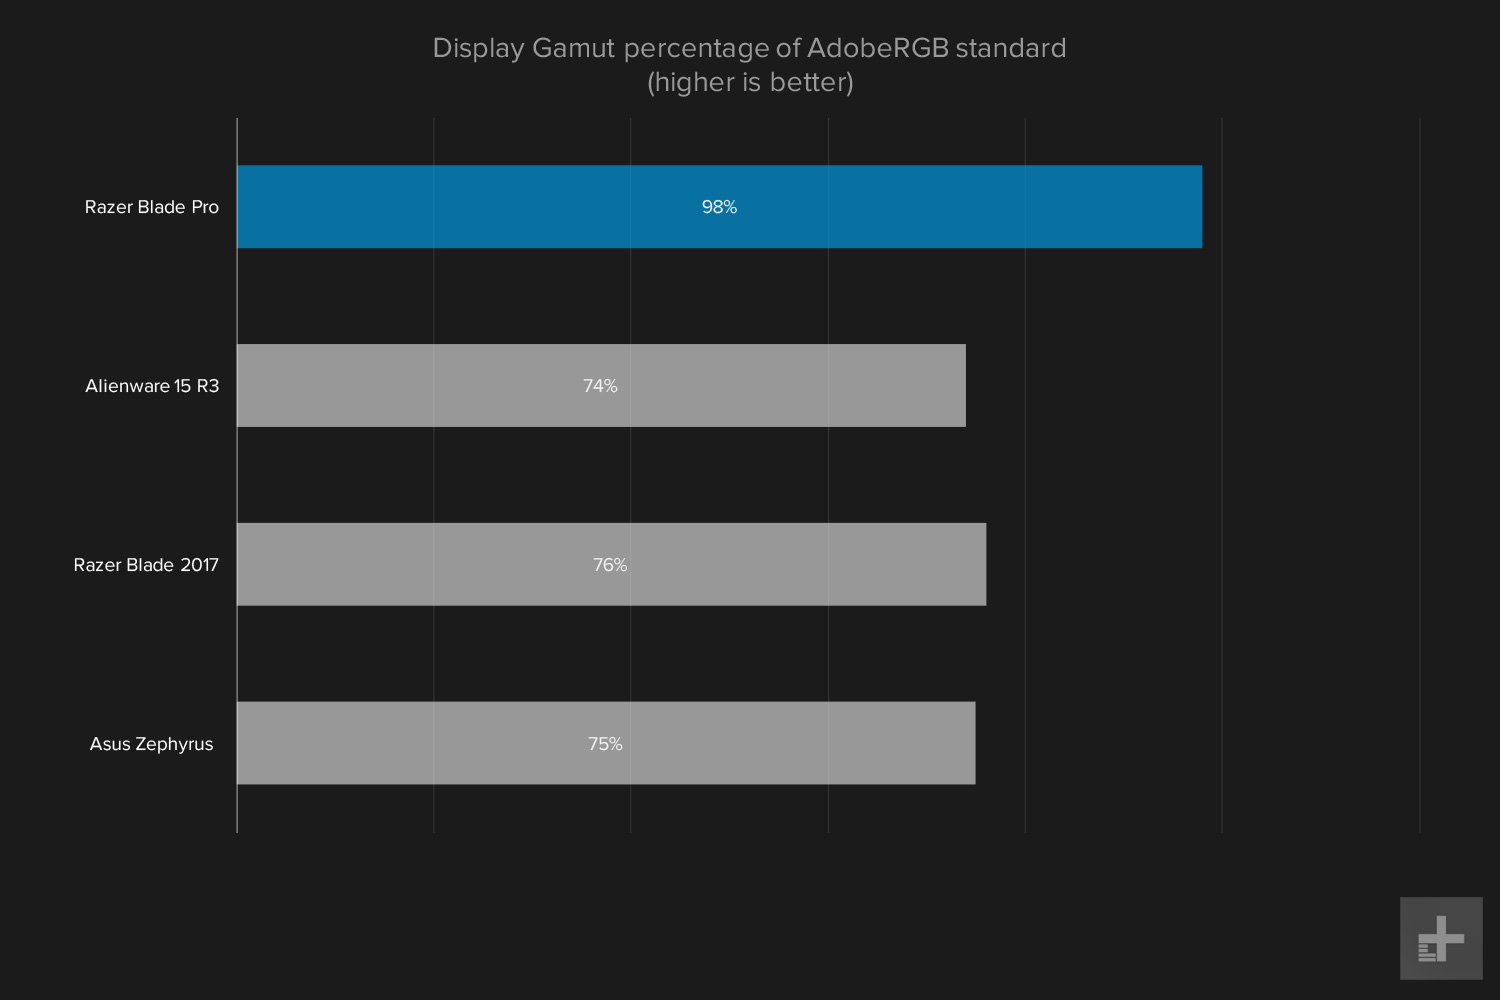 Razer Blade Pro graph display gamut percentage